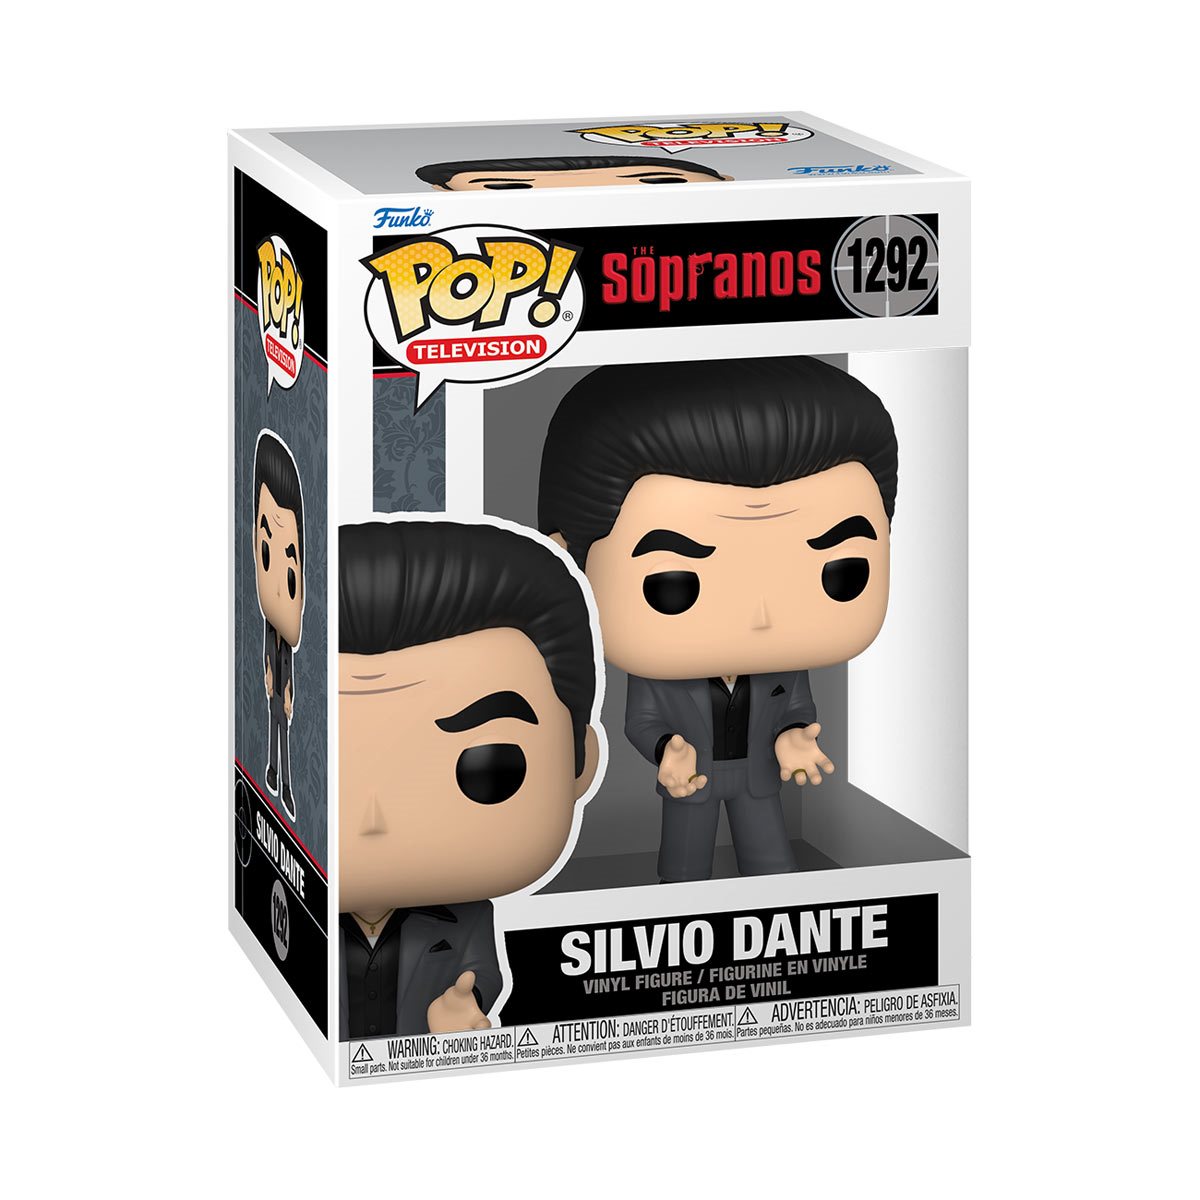 Silvio Dante The Sopranos Pop! Vinyl Figure